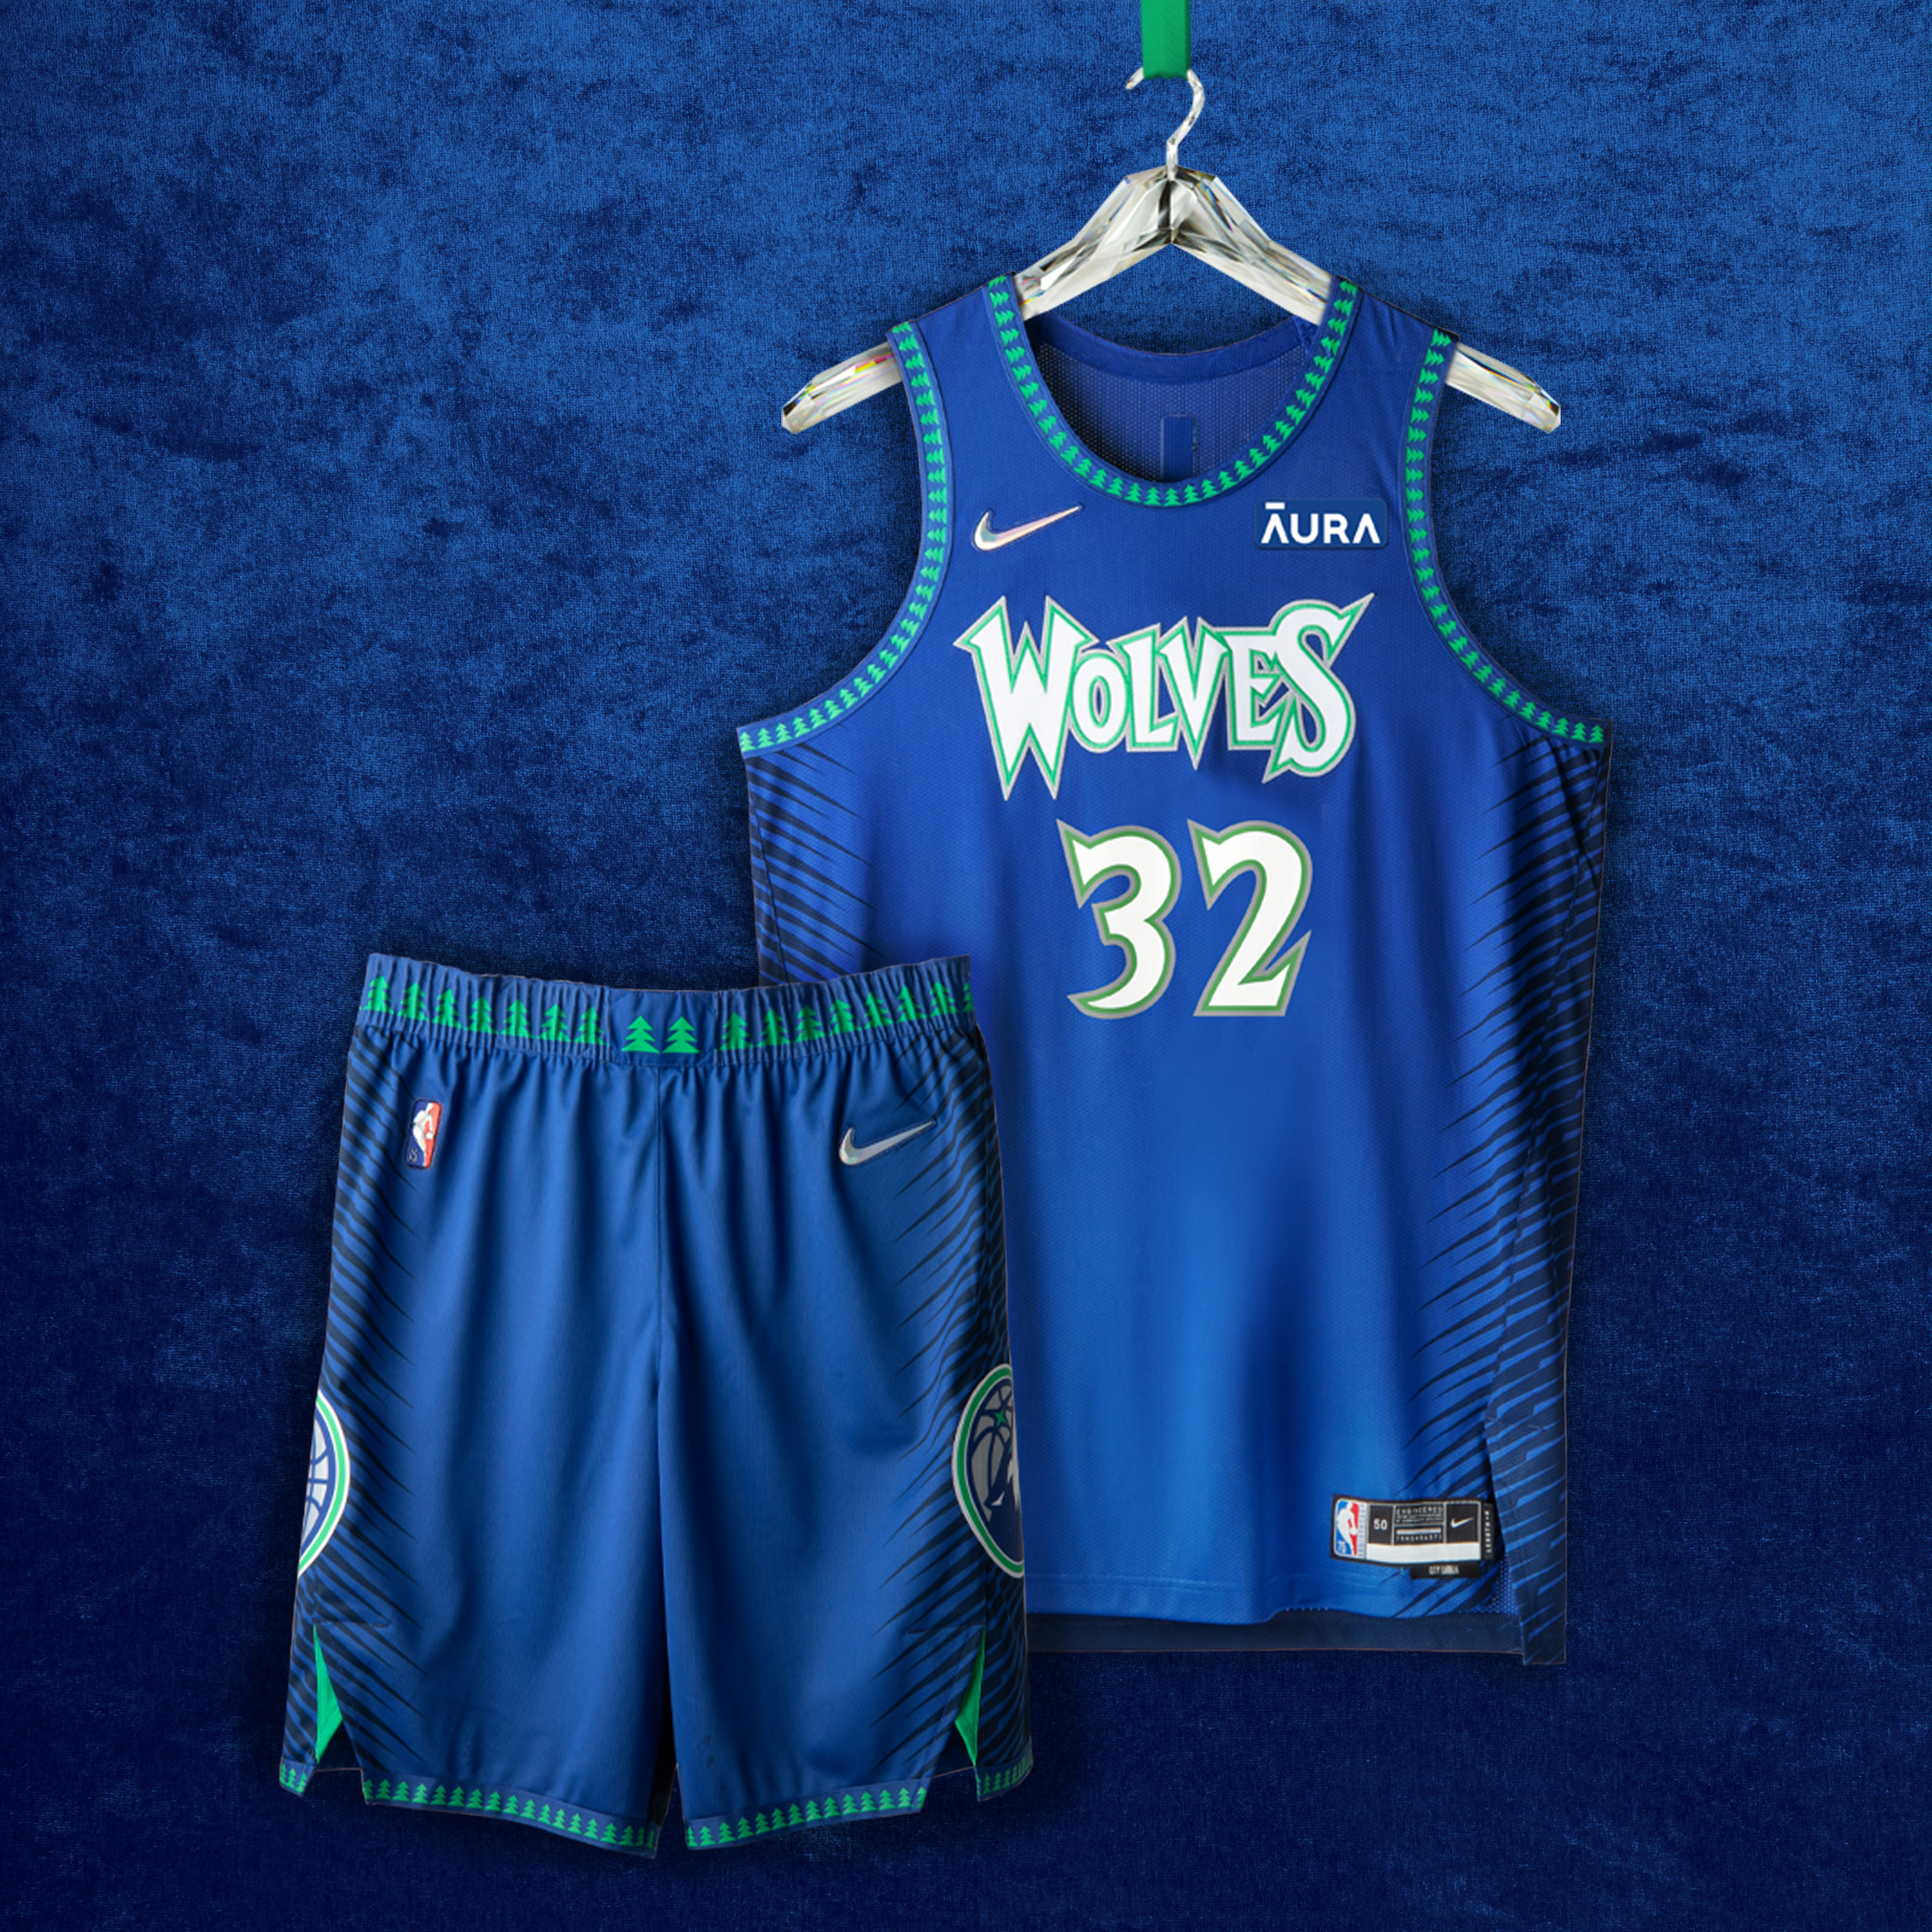 minnesota timberwolves new uniforms